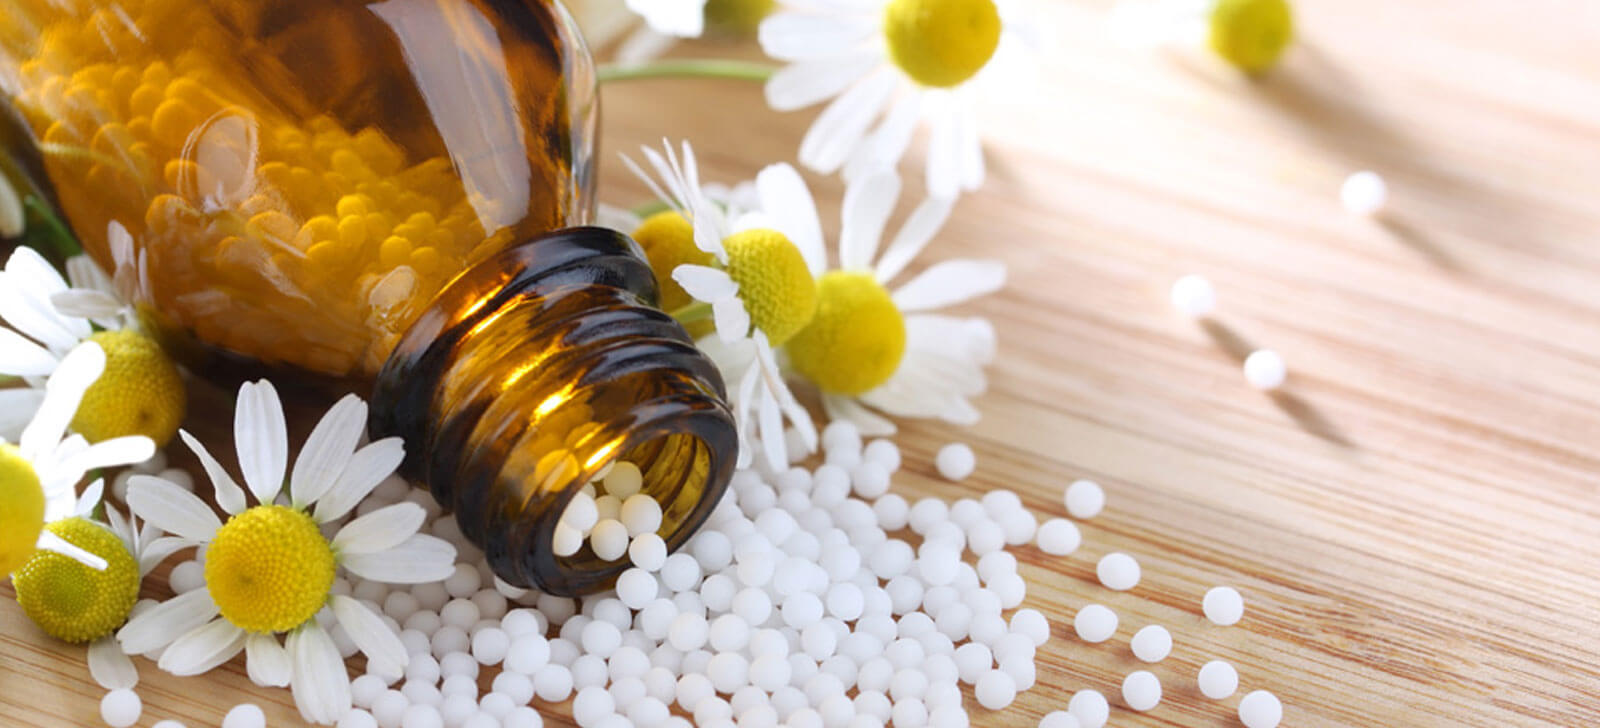 farmacia manipulacao campinas nova natural blog natureza magistral homeopatia homeopatia definicao funciona 